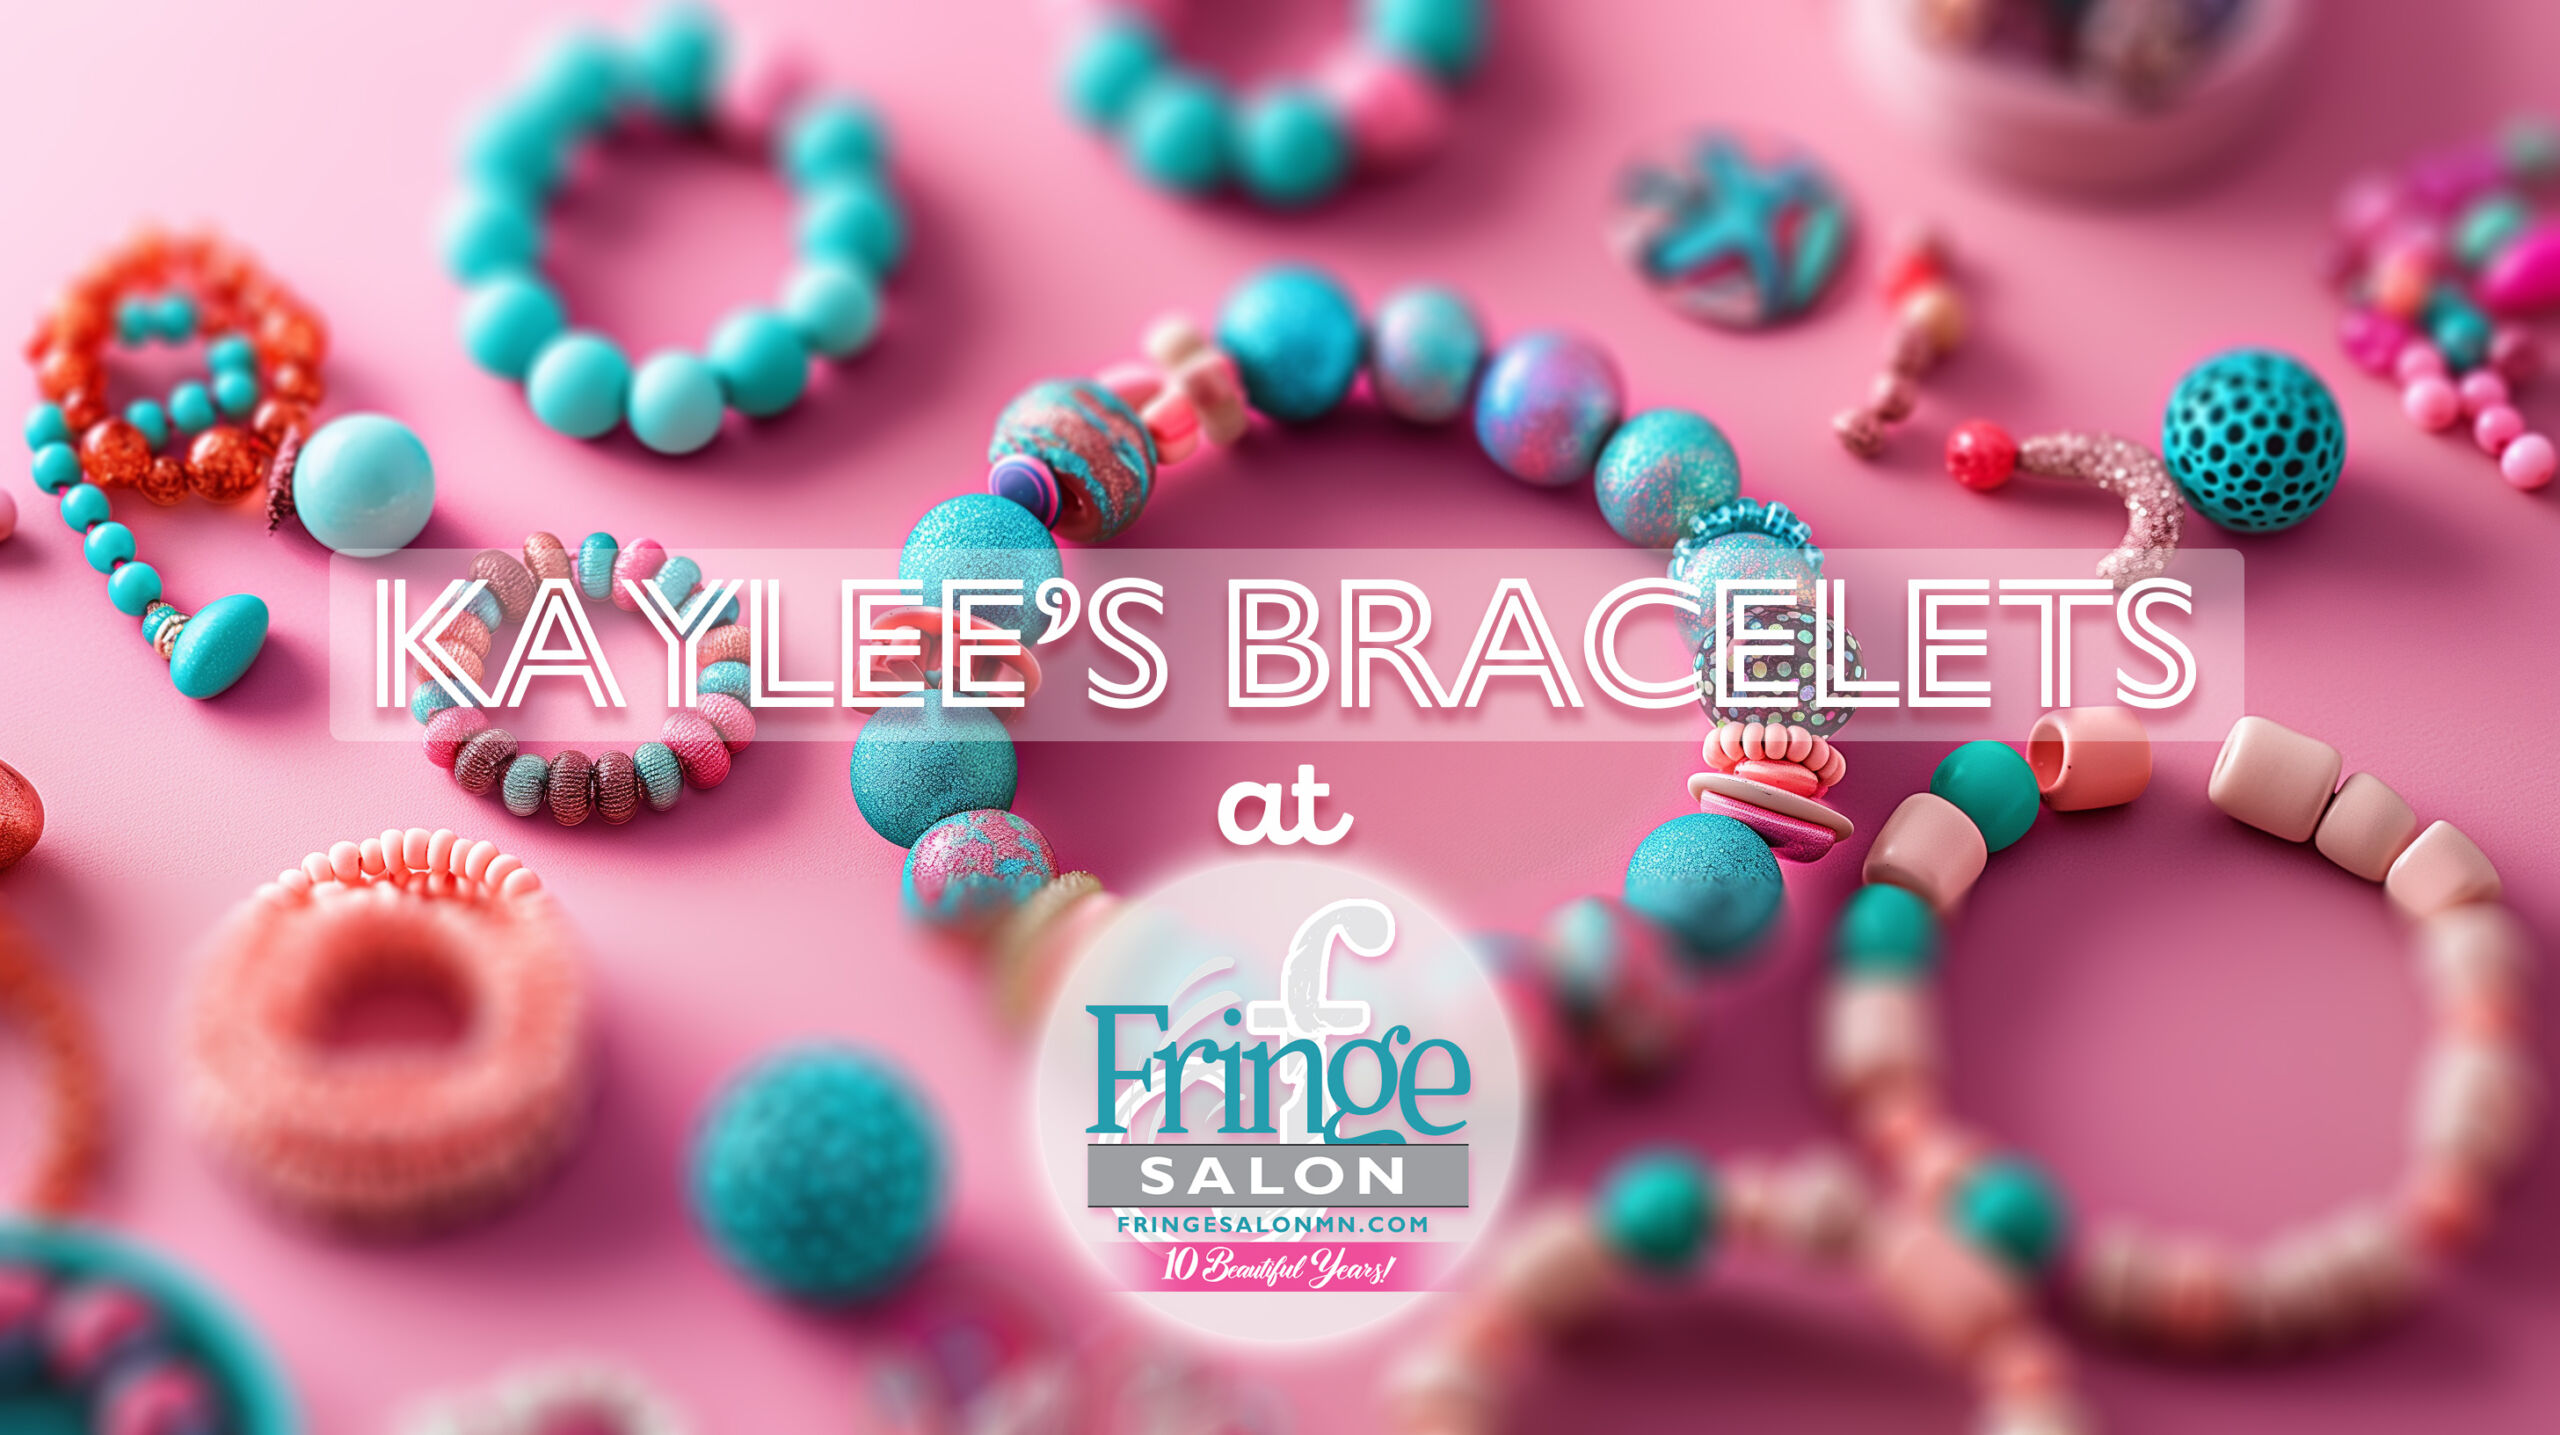 Kaylee's Bracelets at Fringe Salon in Anoka!